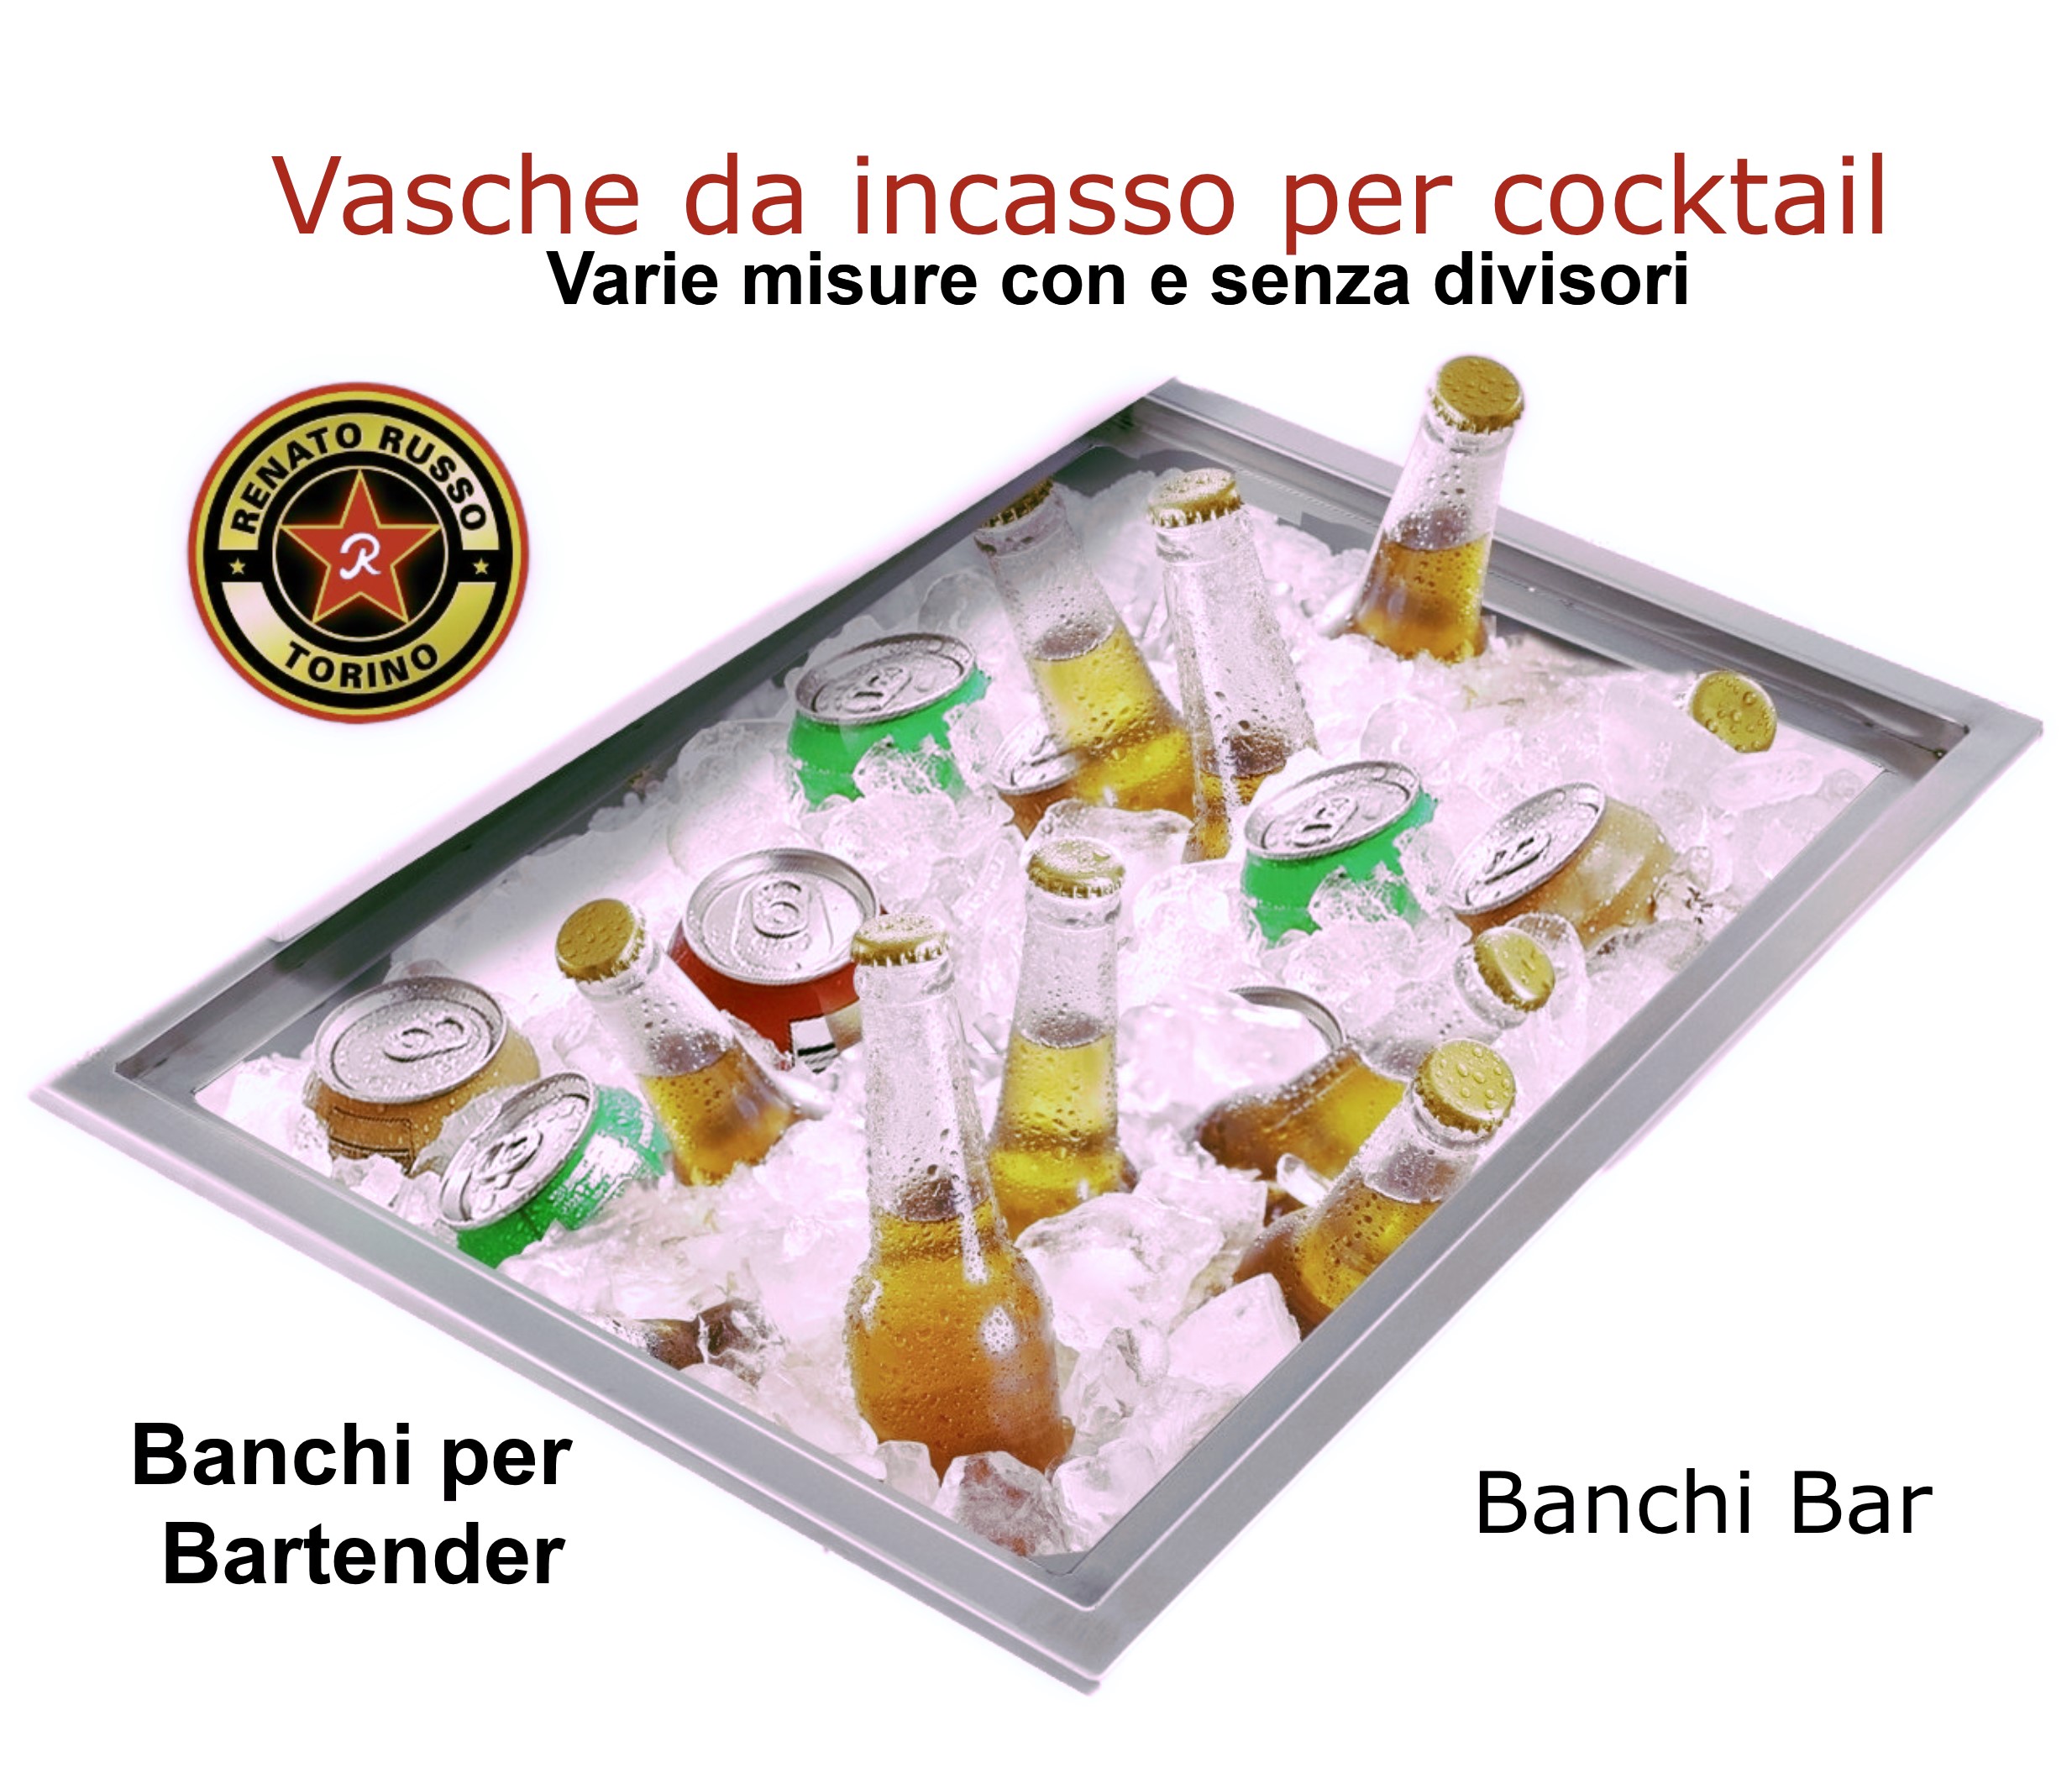 Arredamenti per Bar, Ristoranti, Banchi Frigo, Banchi Bar, Vetrine